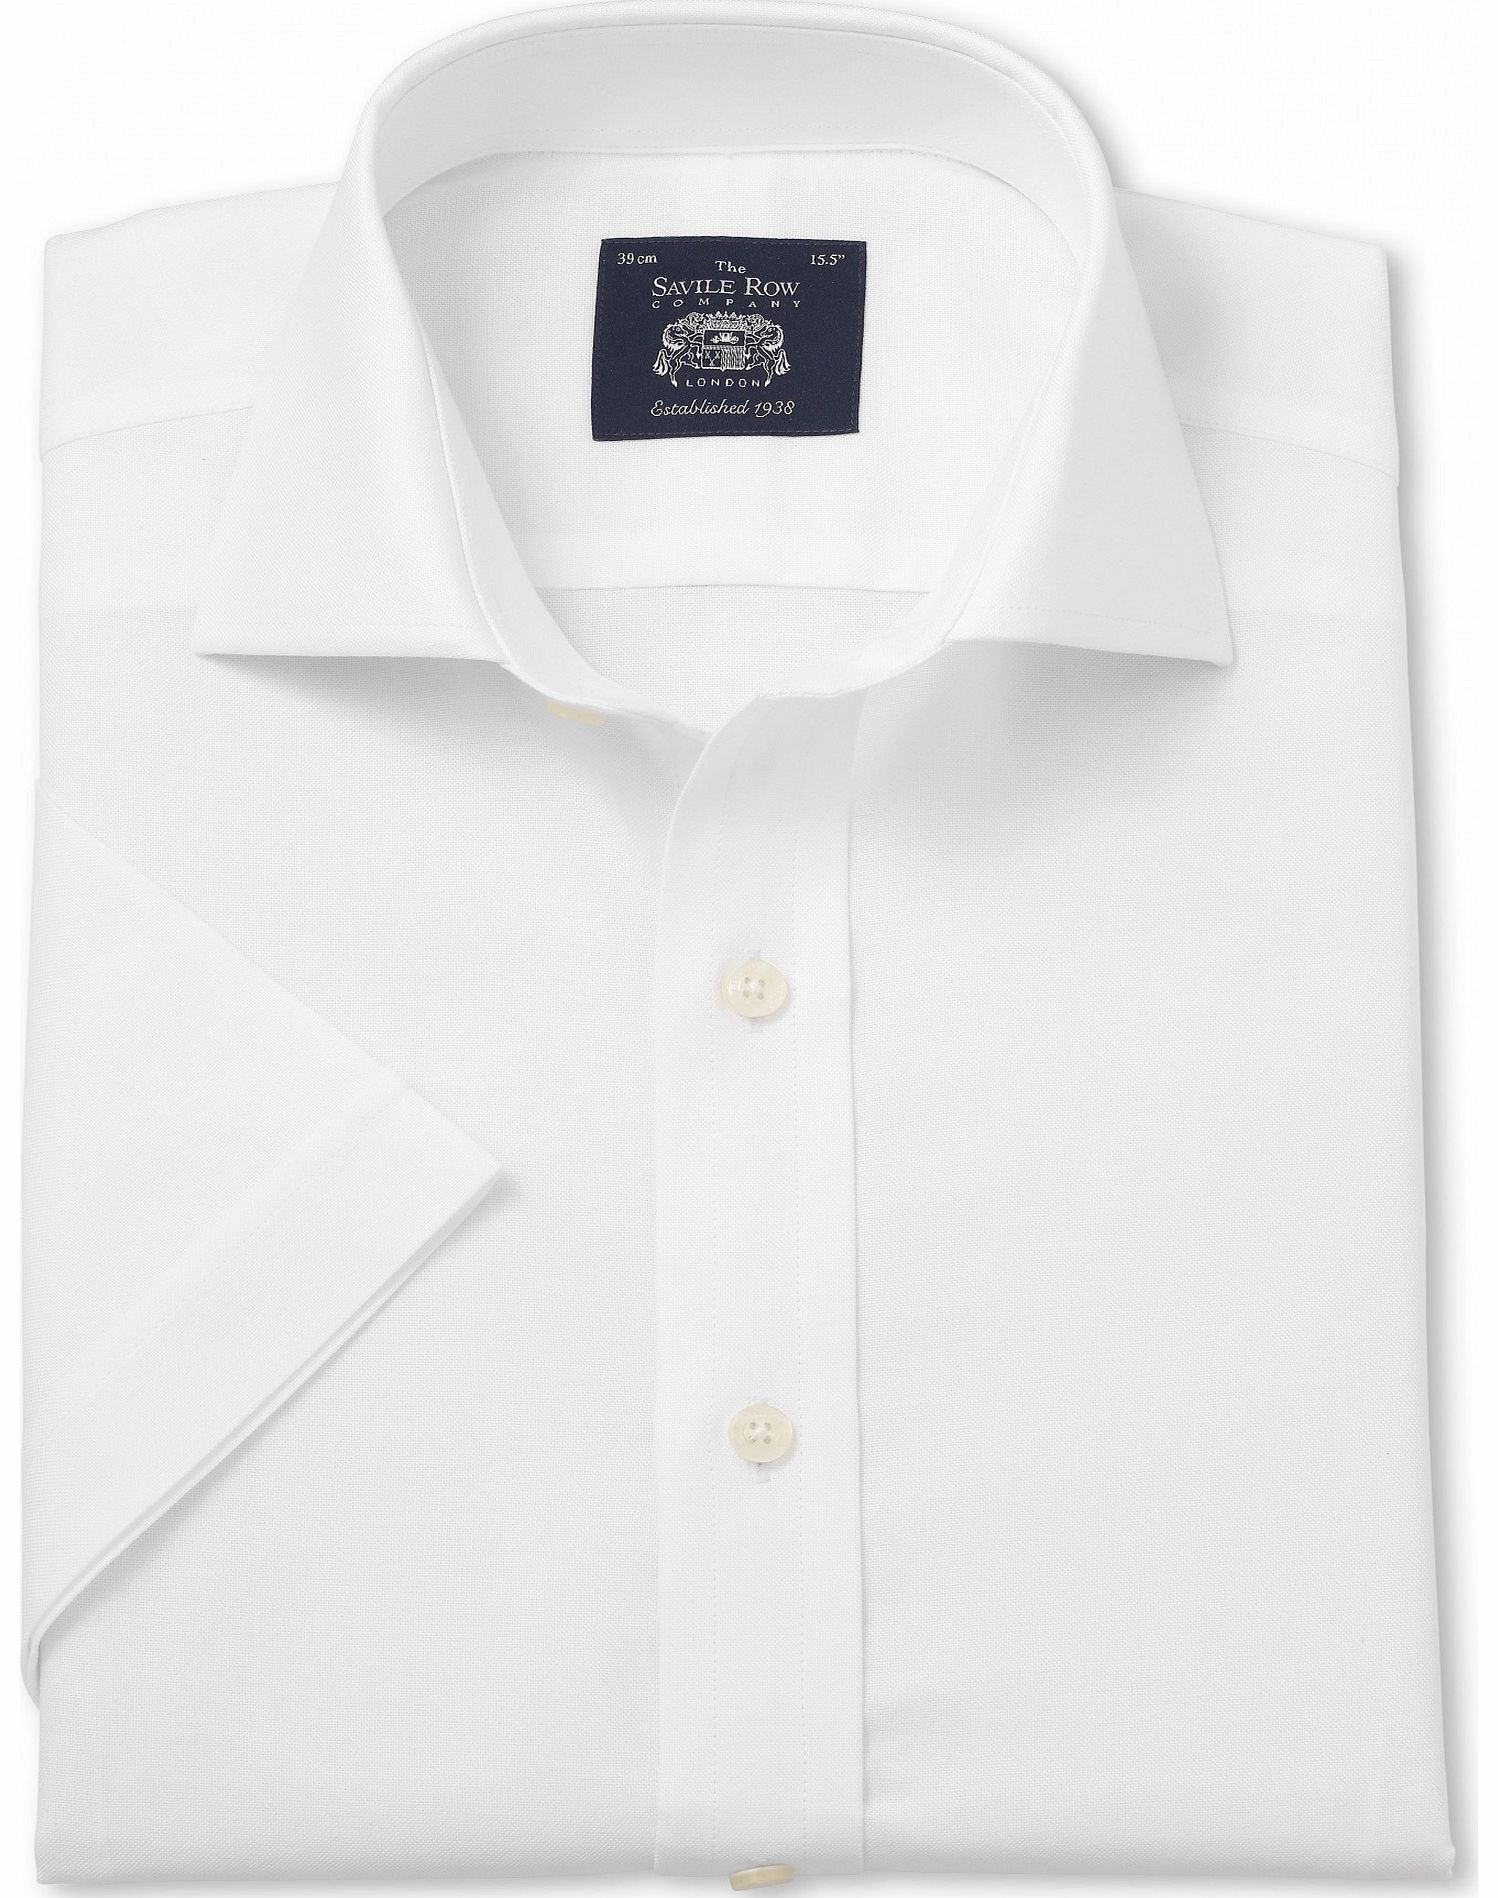 Savile Row Company White Pinpoint Short Sleeve Slim Fit Shirt 16